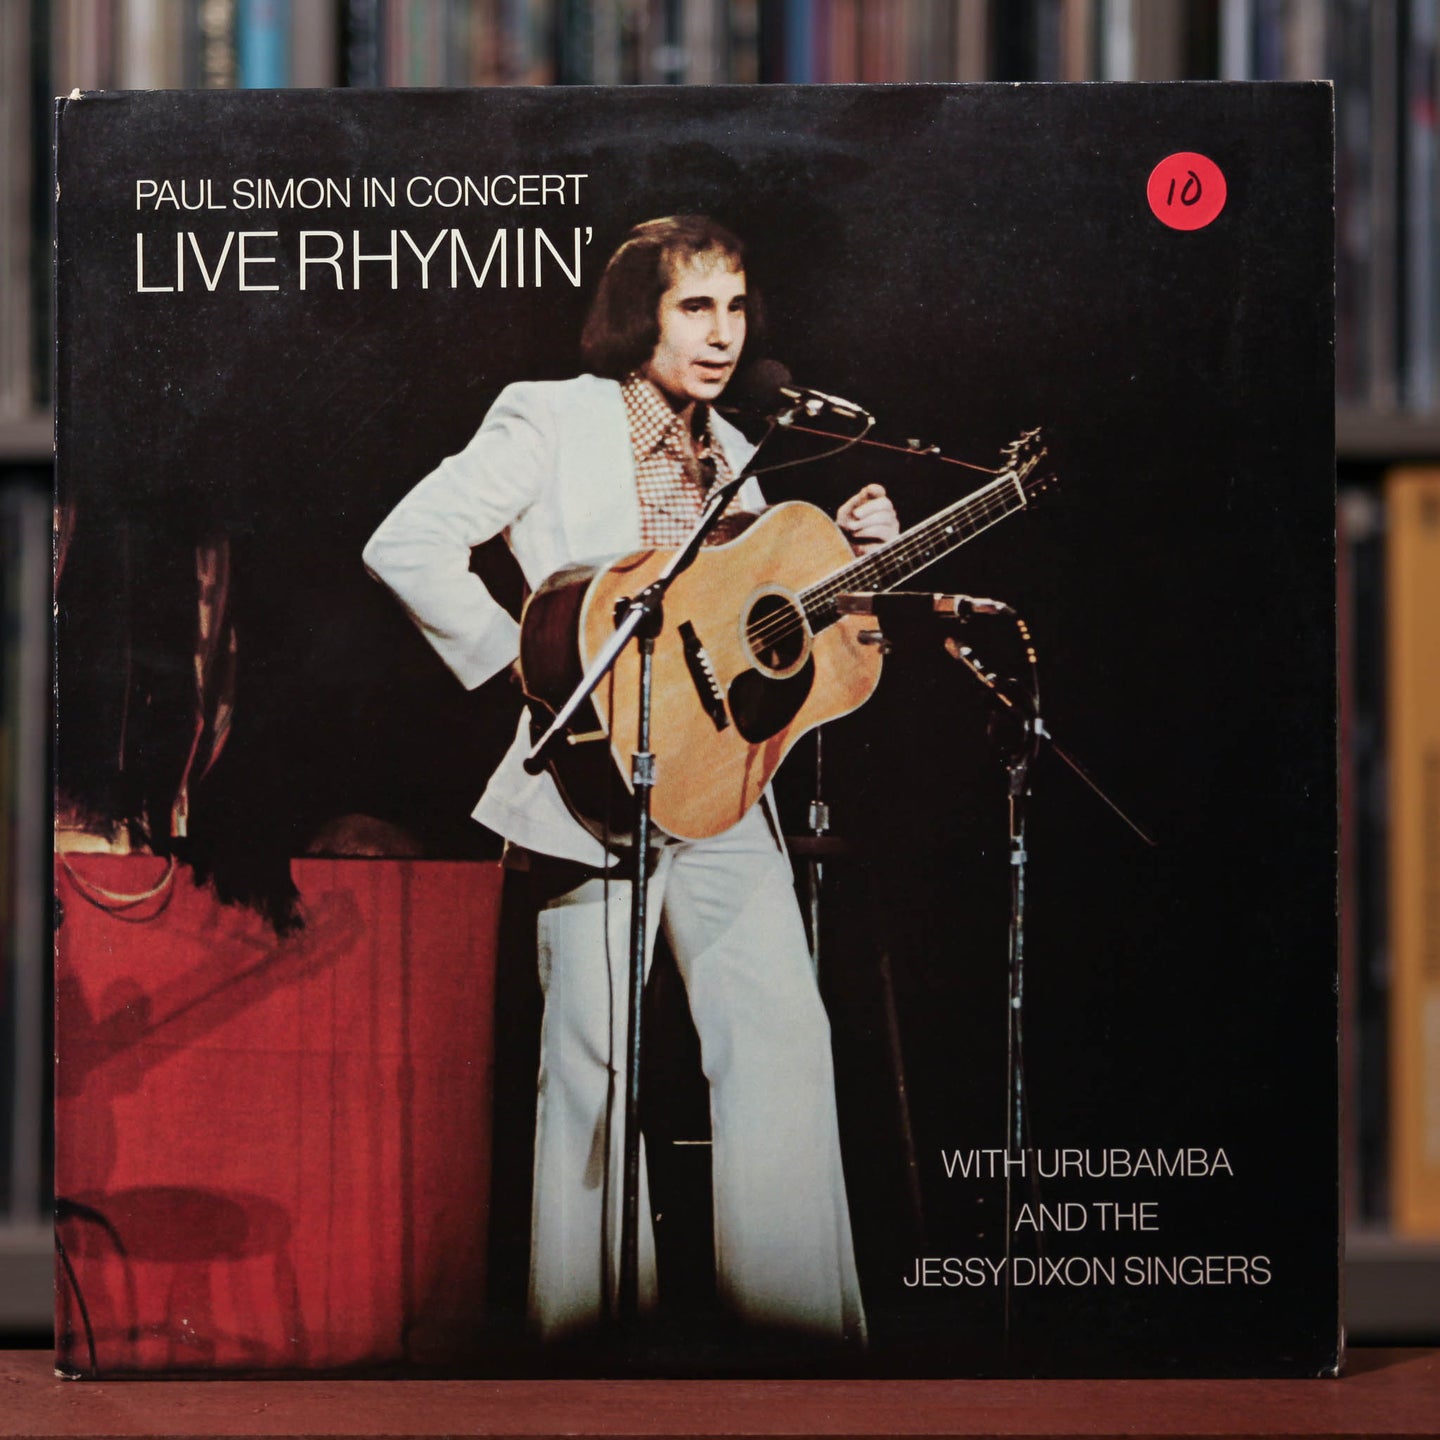 Paul Simon - Paul Simon In Concert Live Rhymin' - 1974 Columbia, VG+/VG+